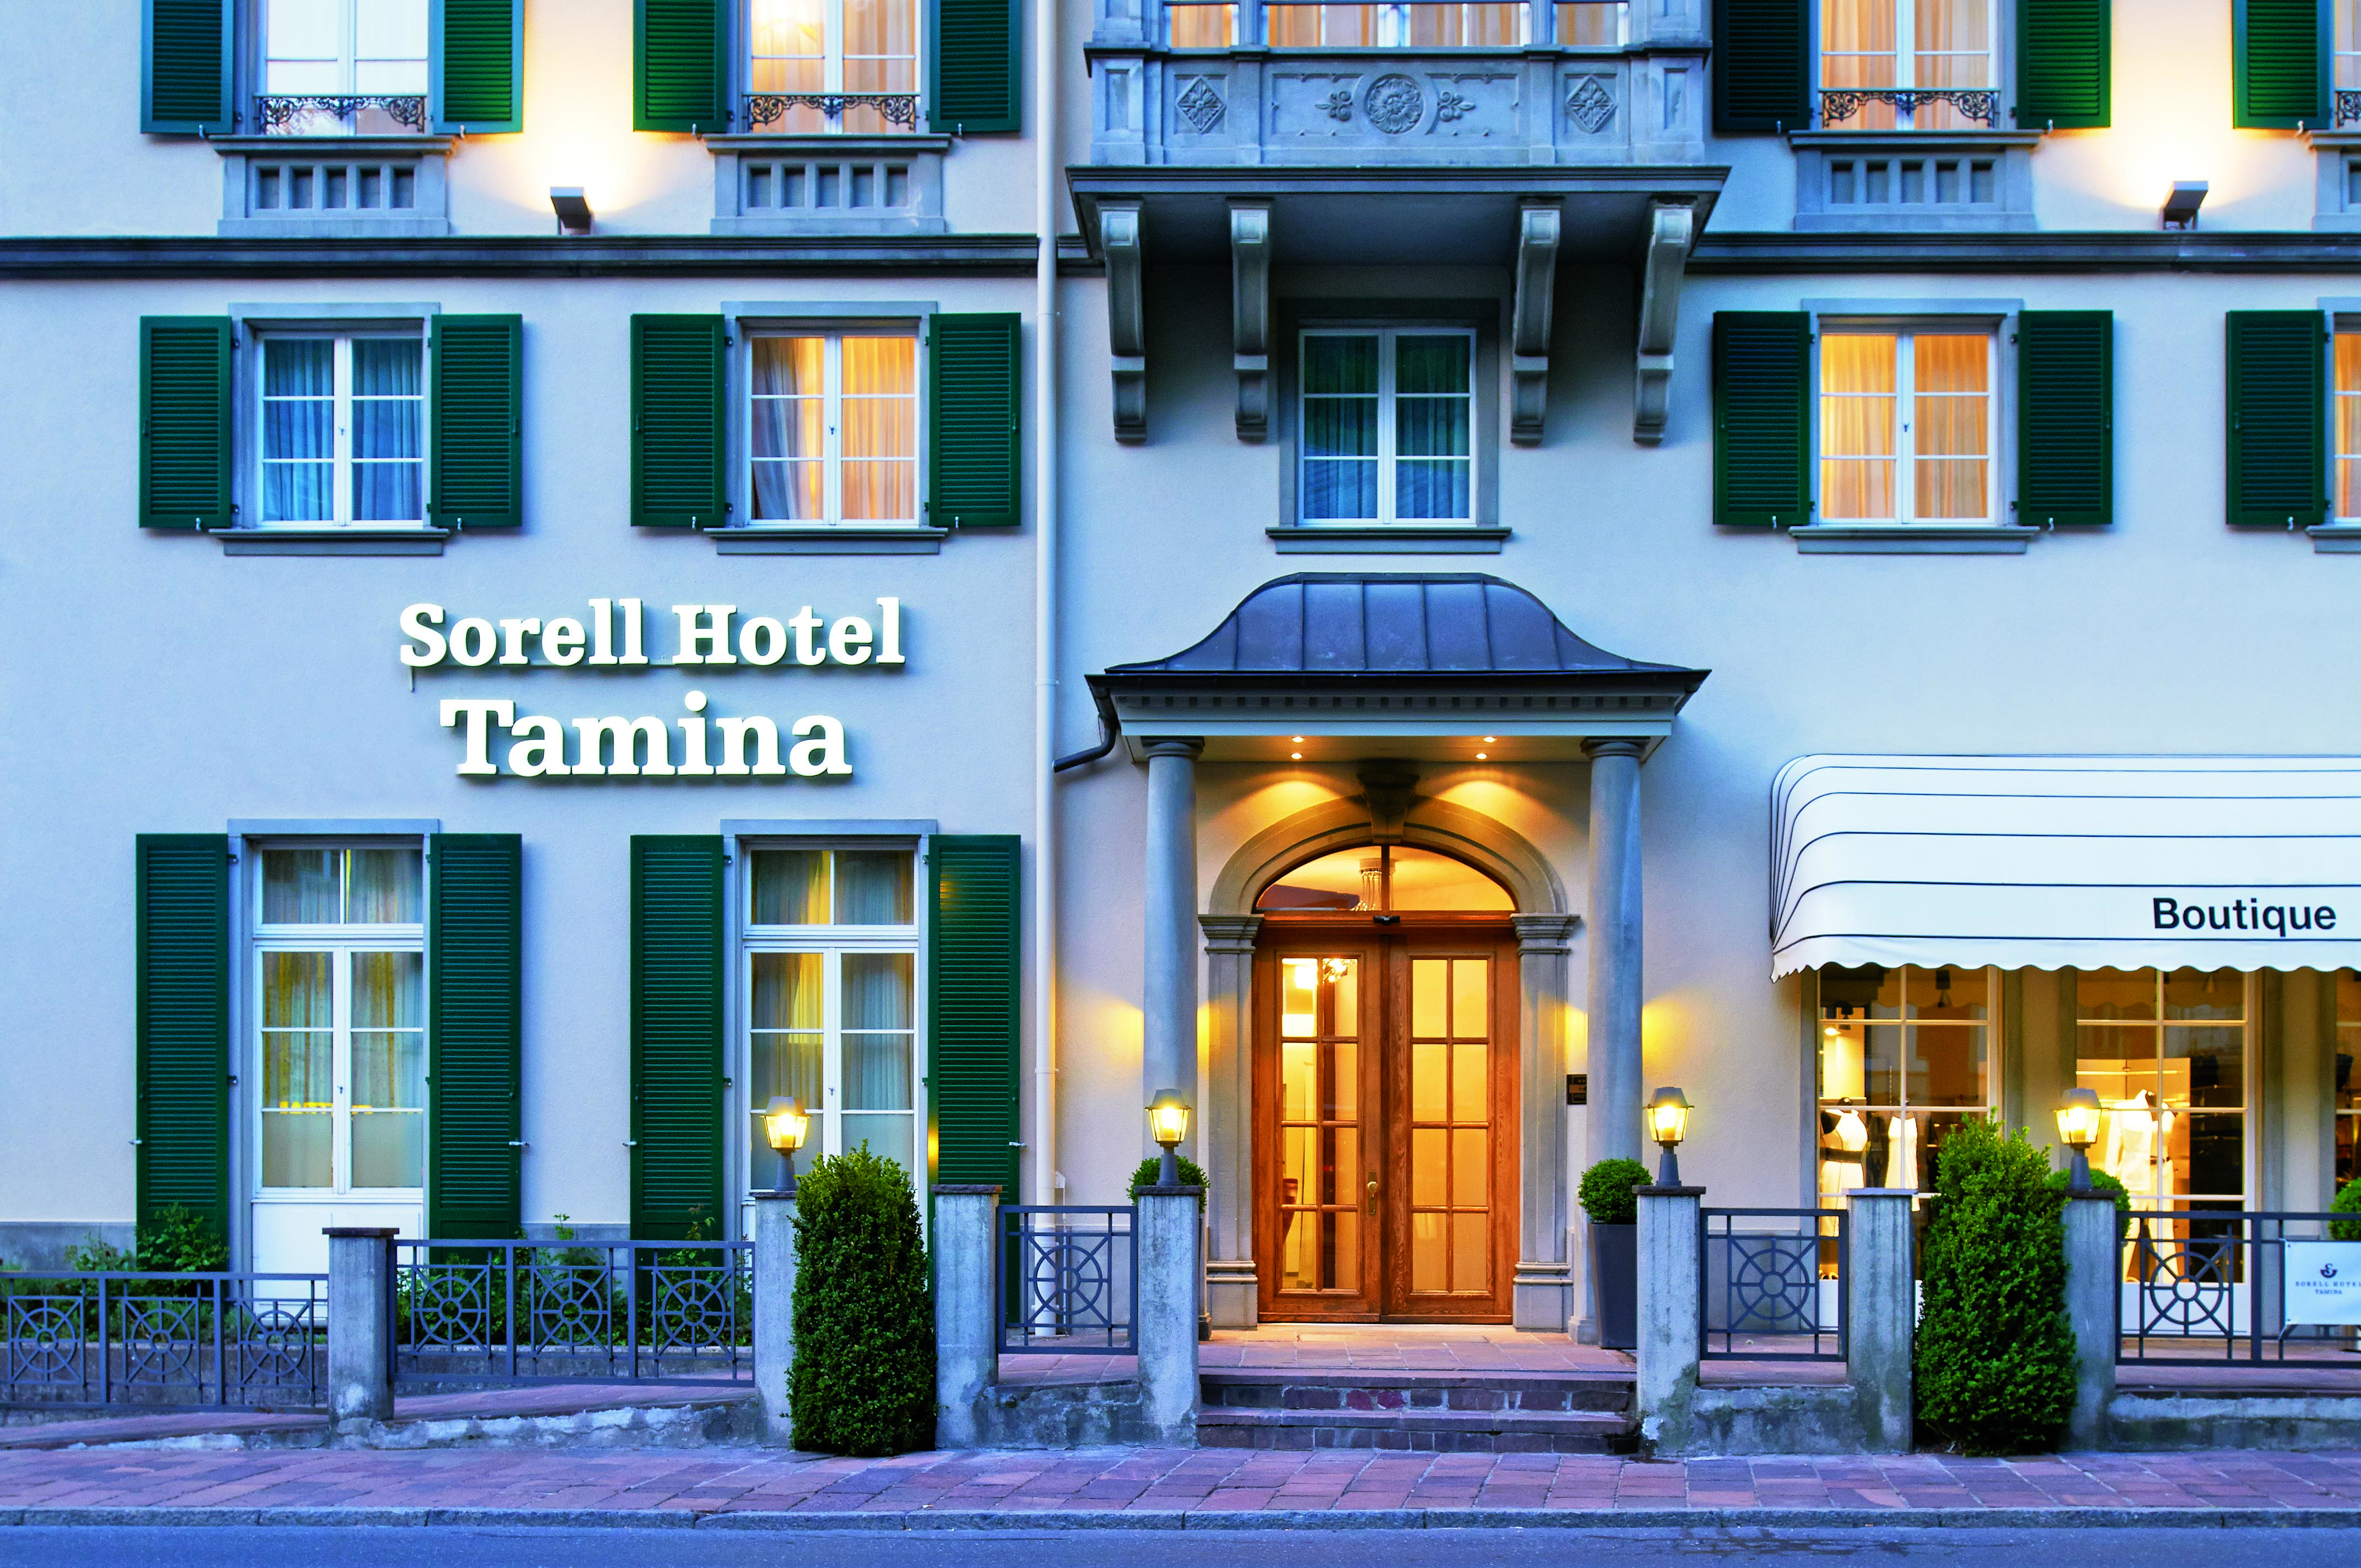 Sorell hotels